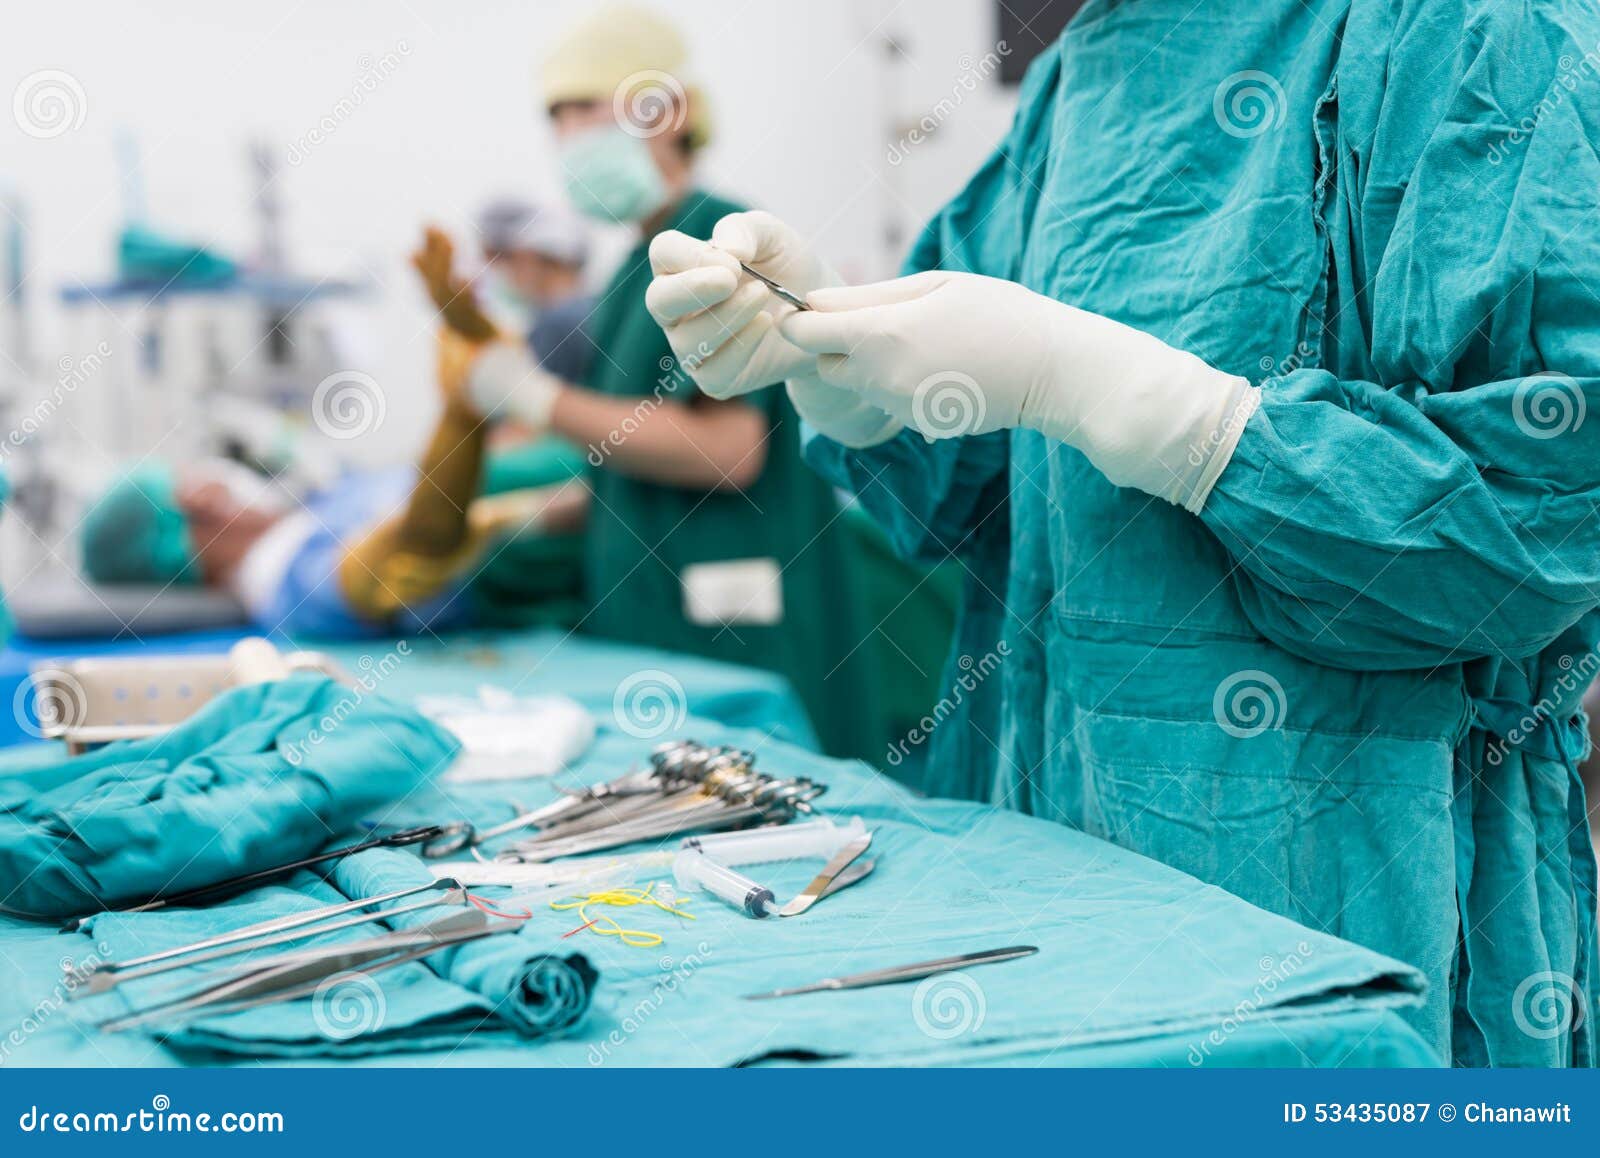 scrub nurse prepare medical instruments surgery